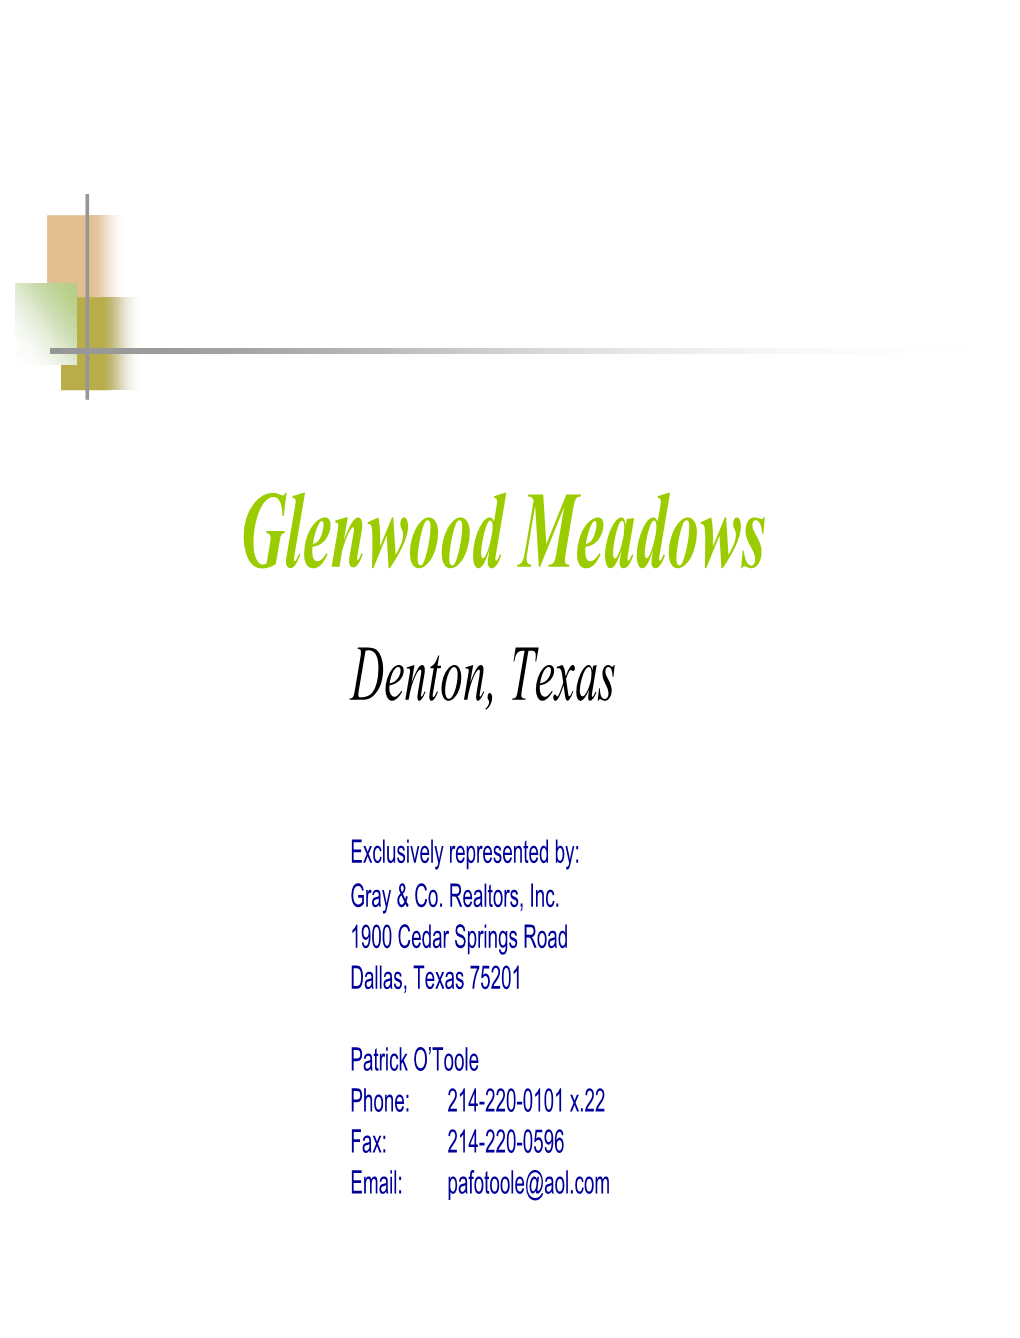 Glenwood Meadows Denton, Texas